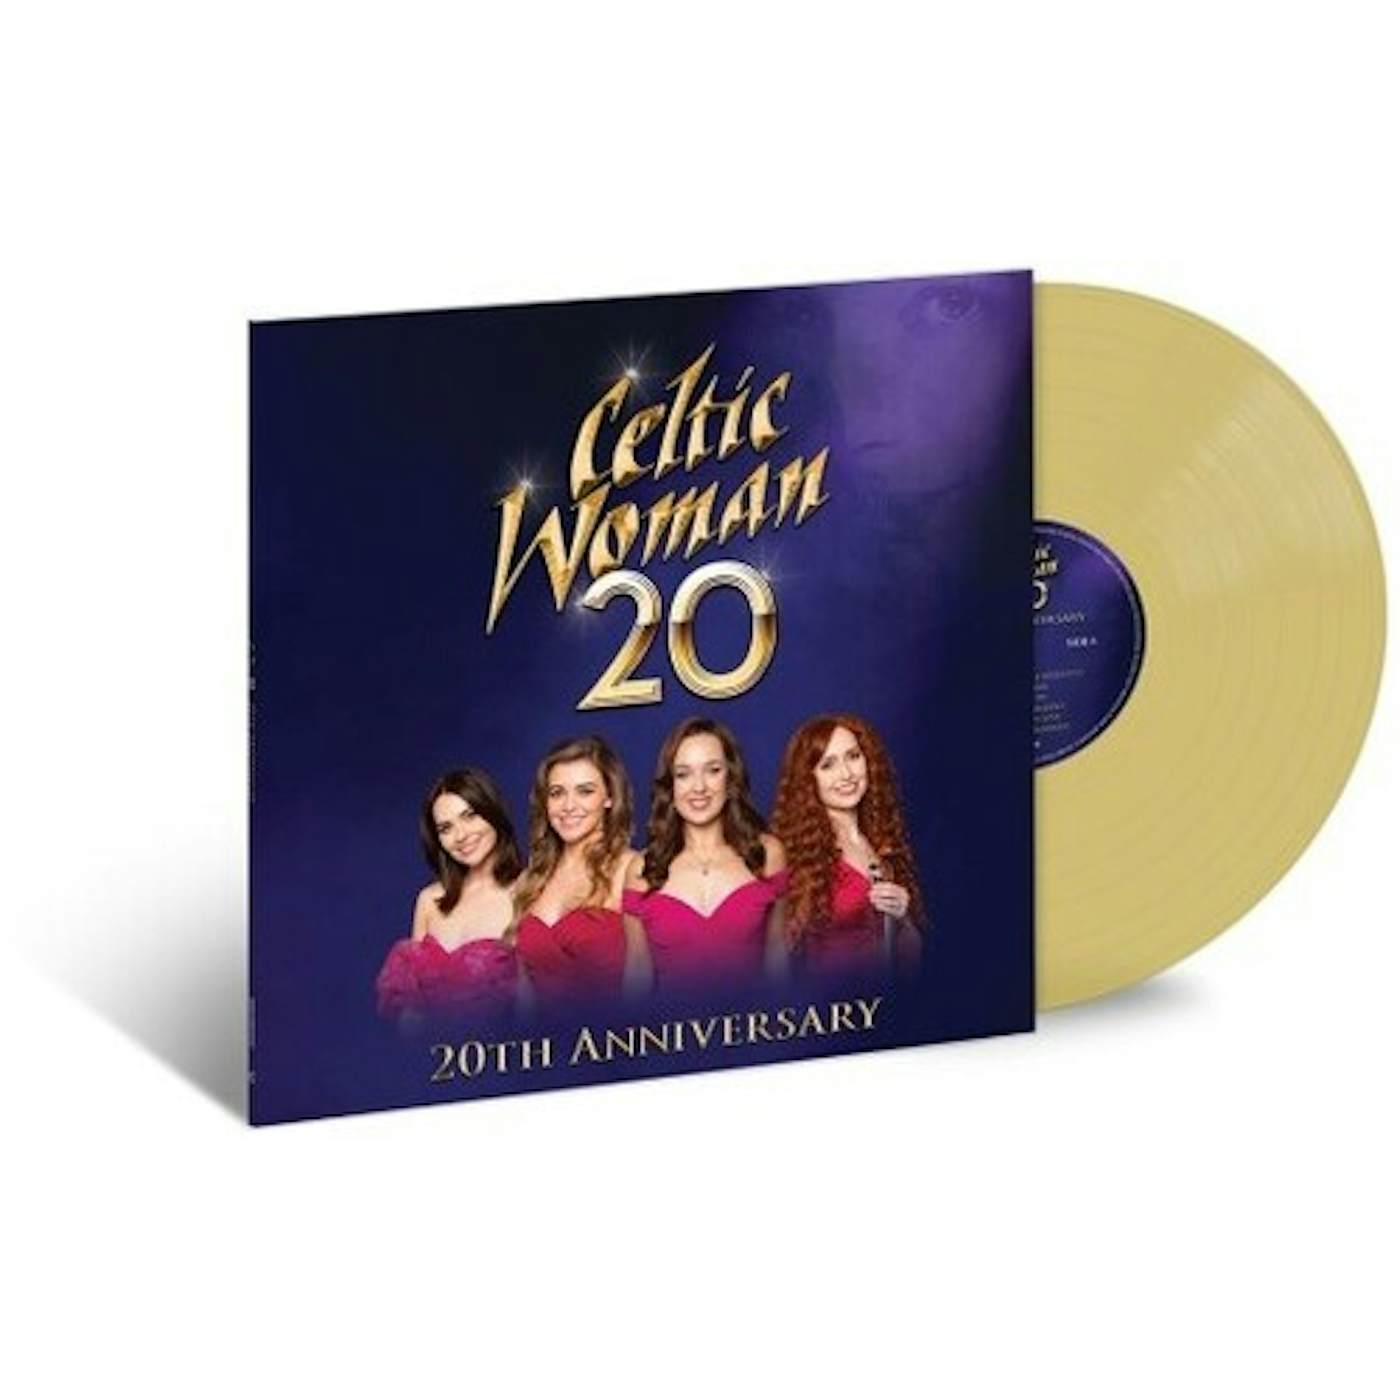 Celtic Woman 20 (20th Anniversary) Vinyl Record